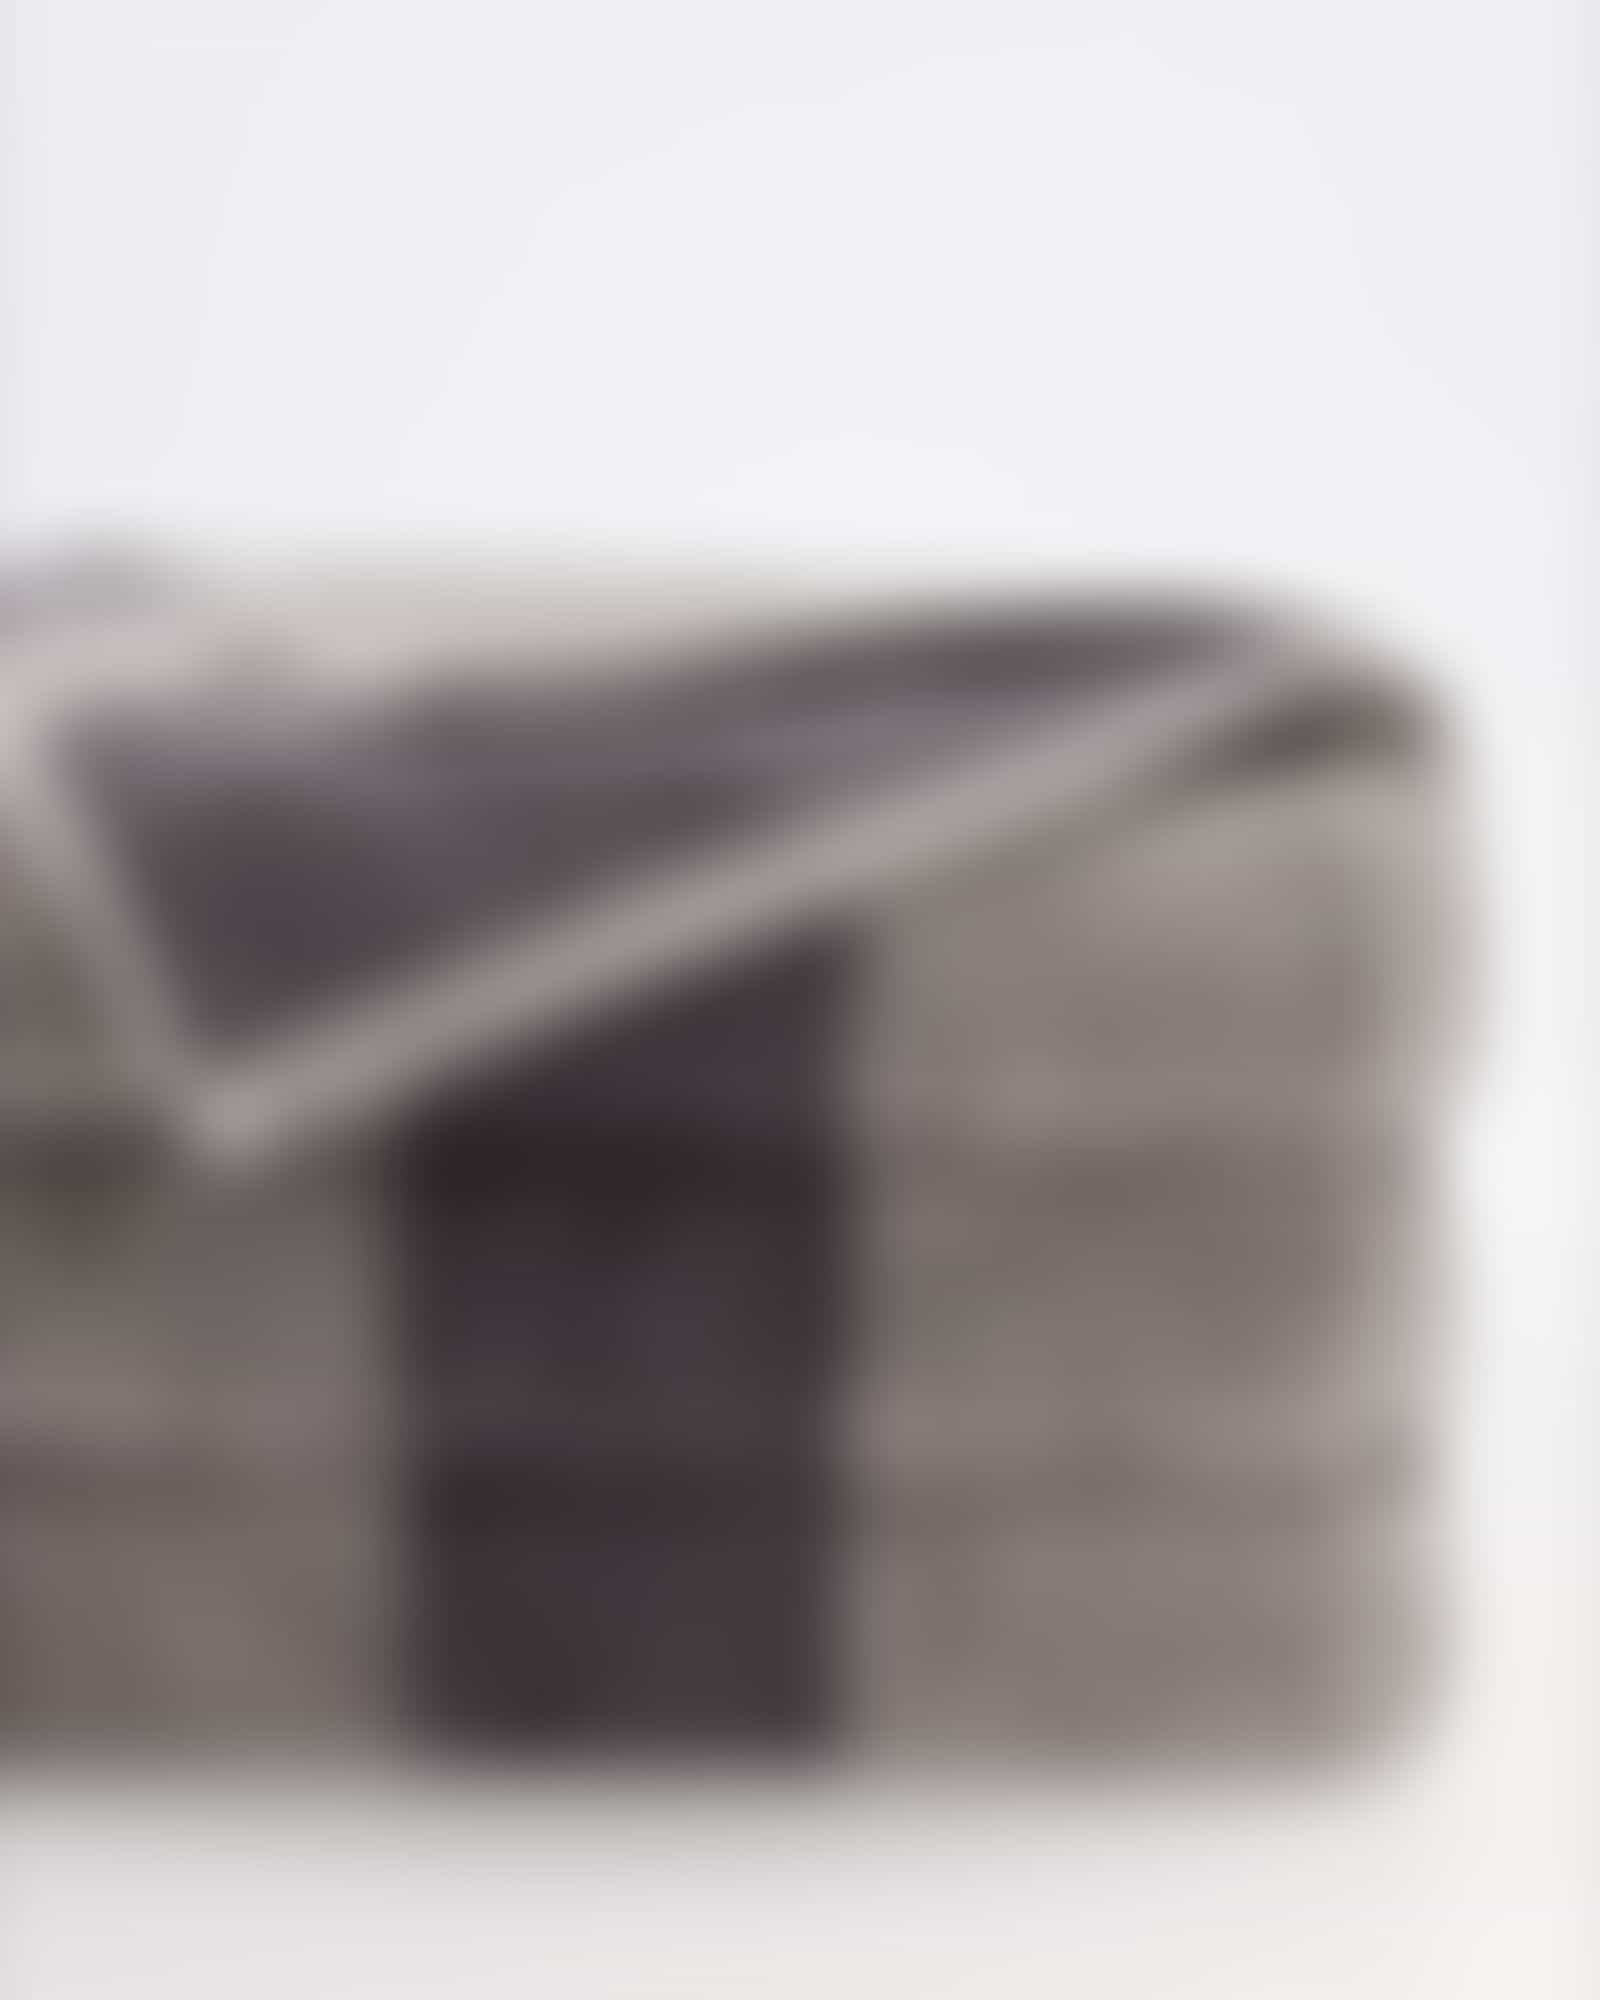 JOOP Shades Stripe 1687 - Farbe: platin - 77 Detailbild 2